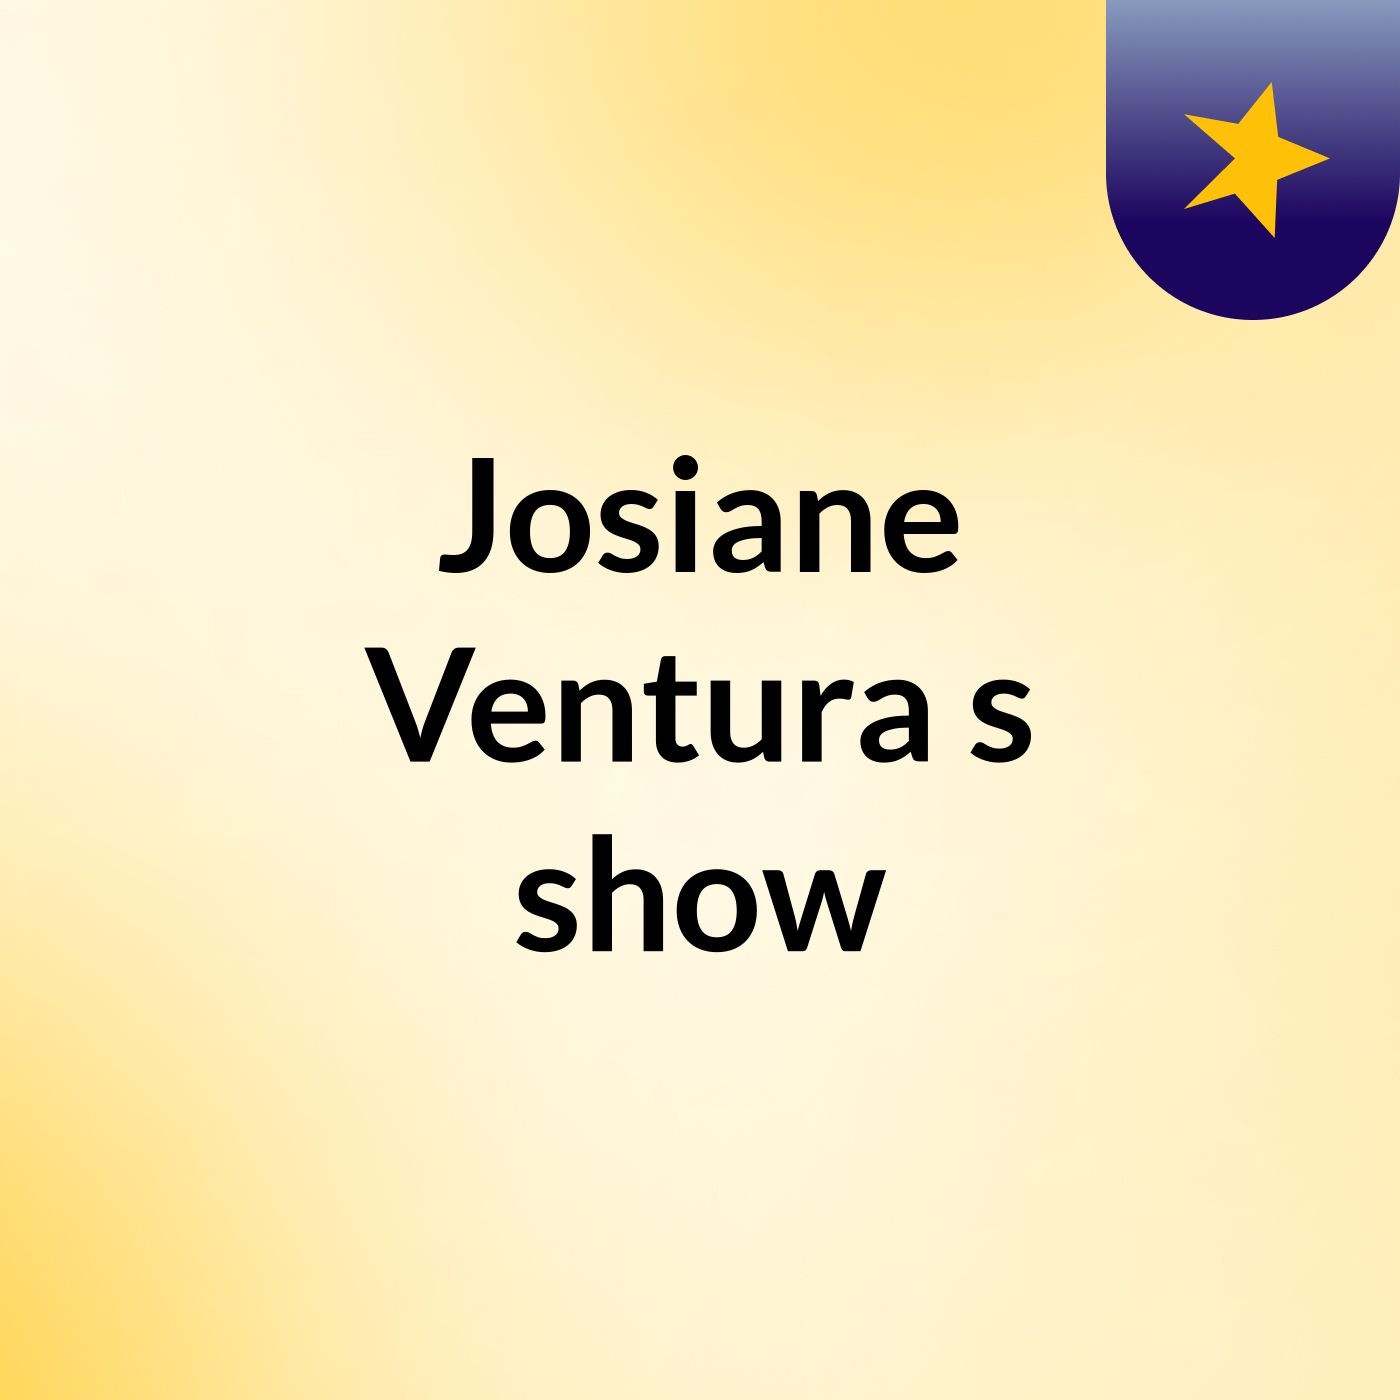 Josiane Ventura's show